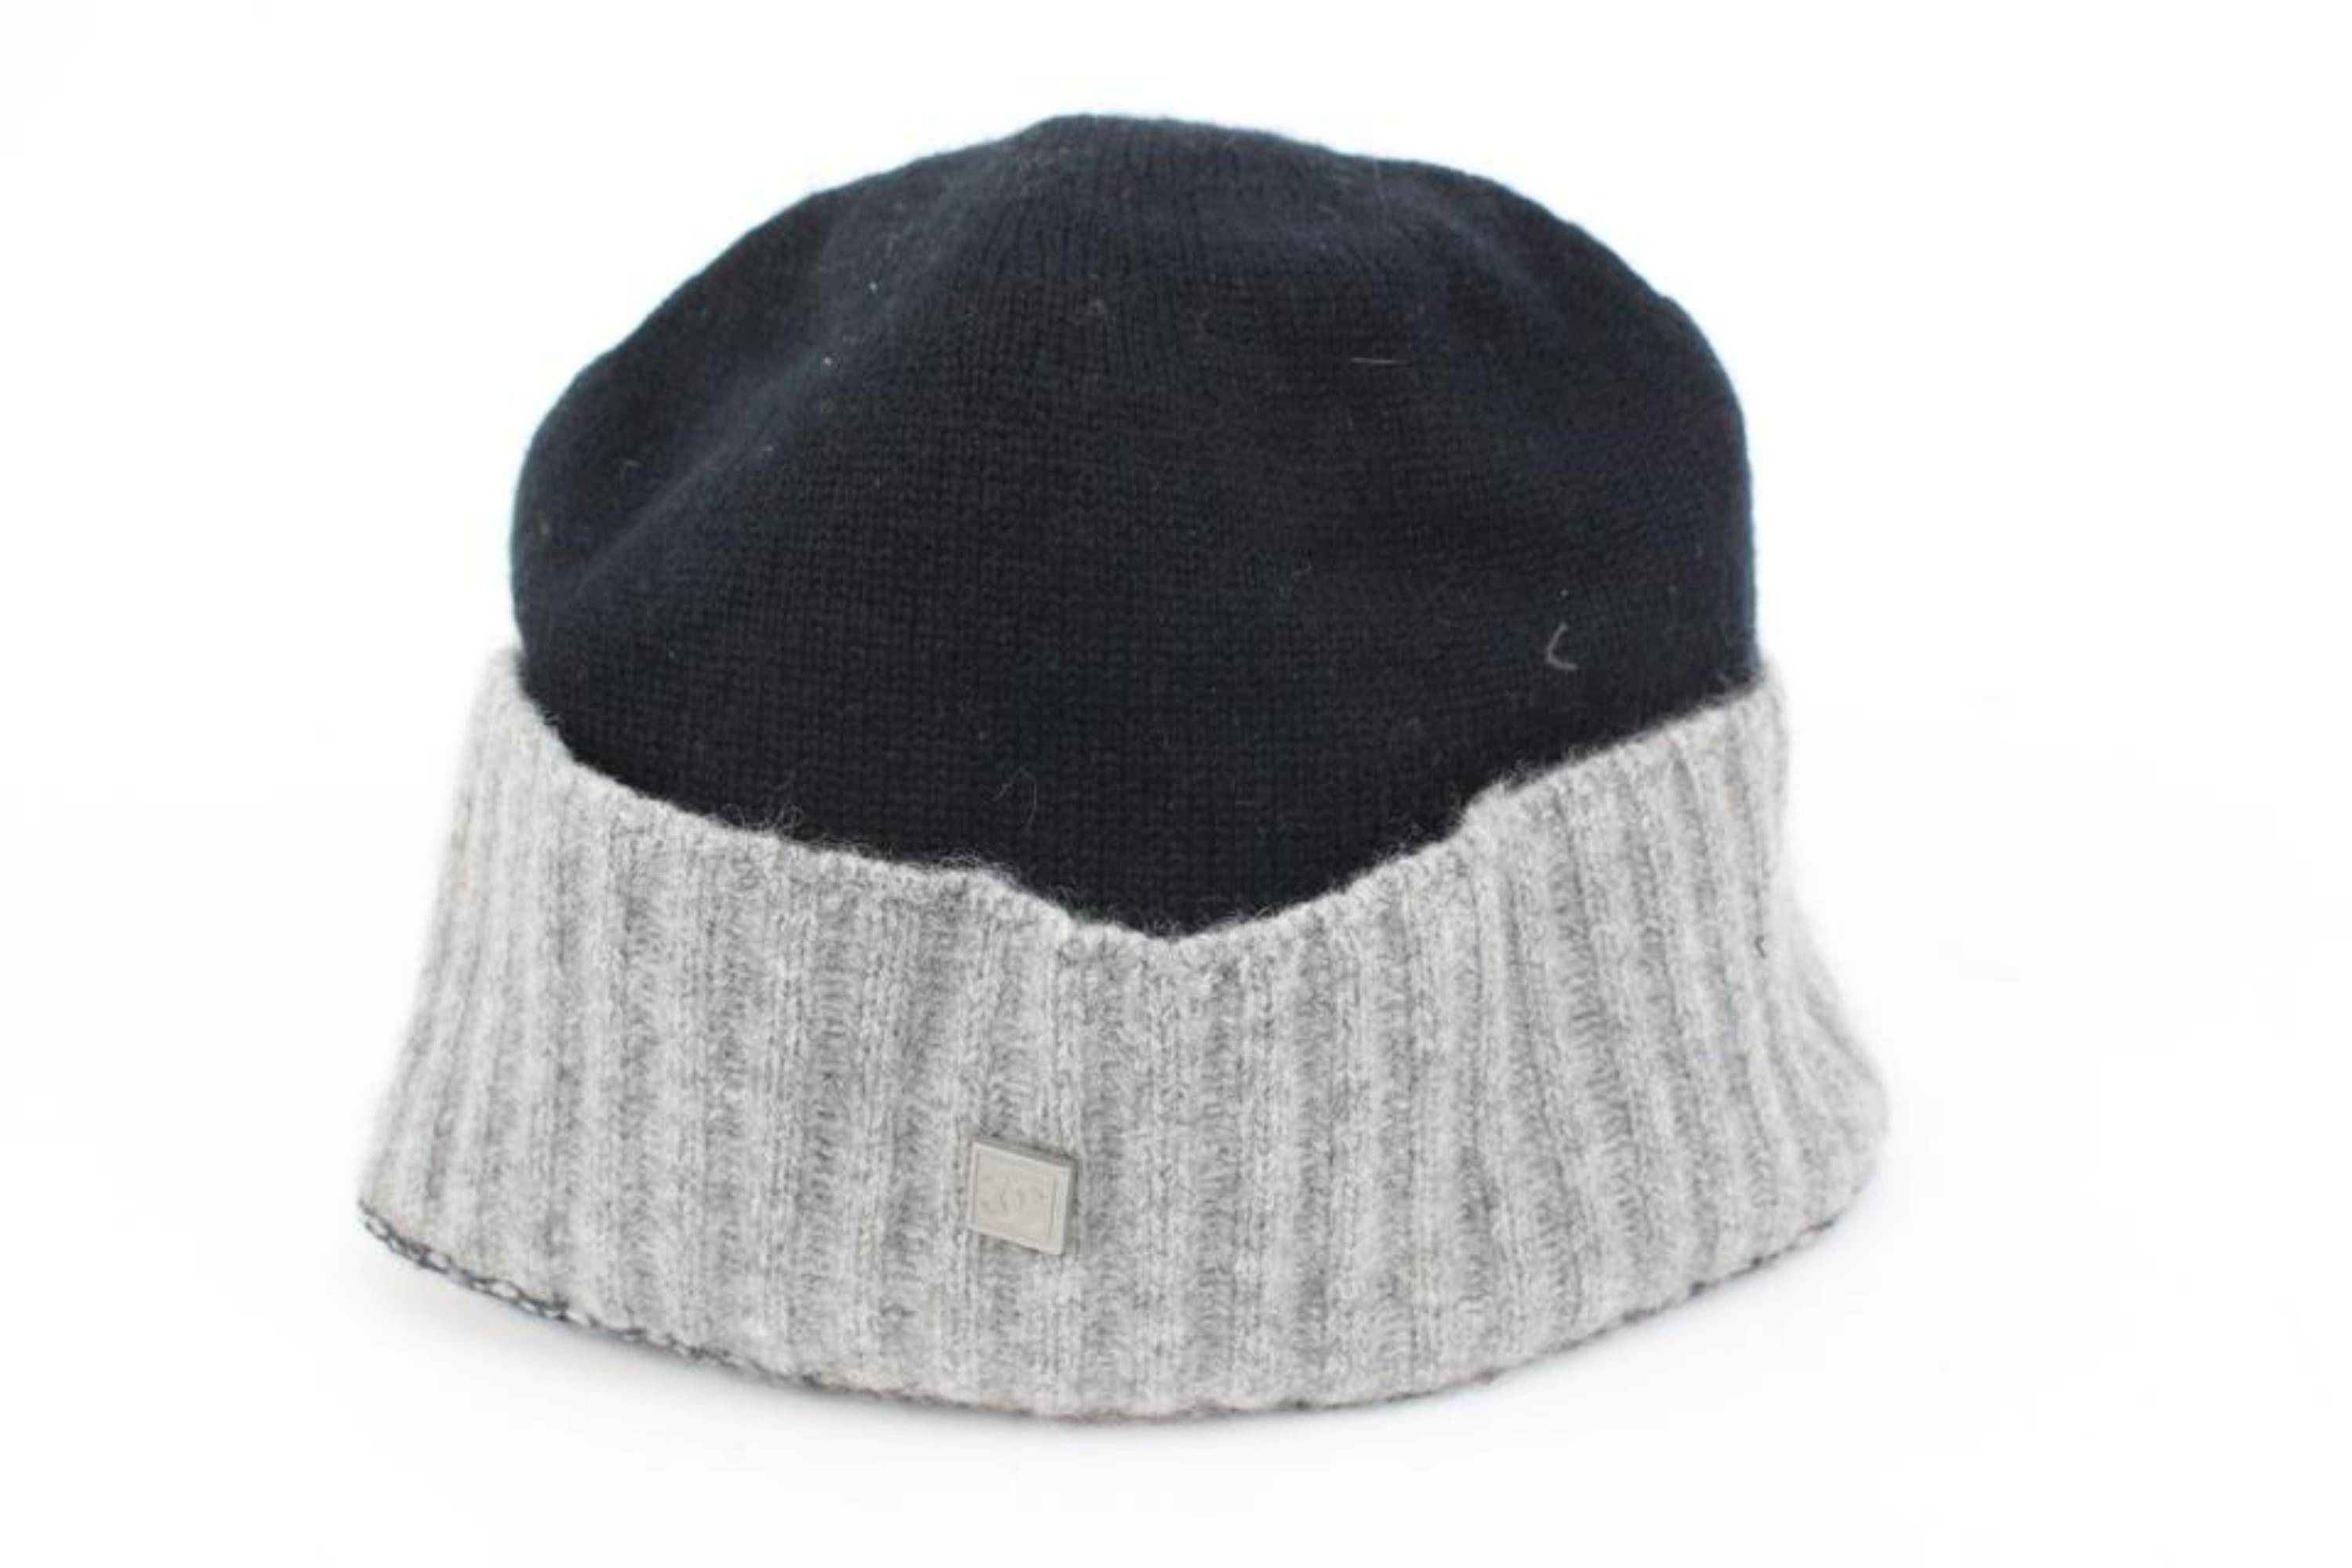 Chanel Black x Grey Cashmere CC Logo Beanie Skull Cap Ski Hat 53ck325s 3